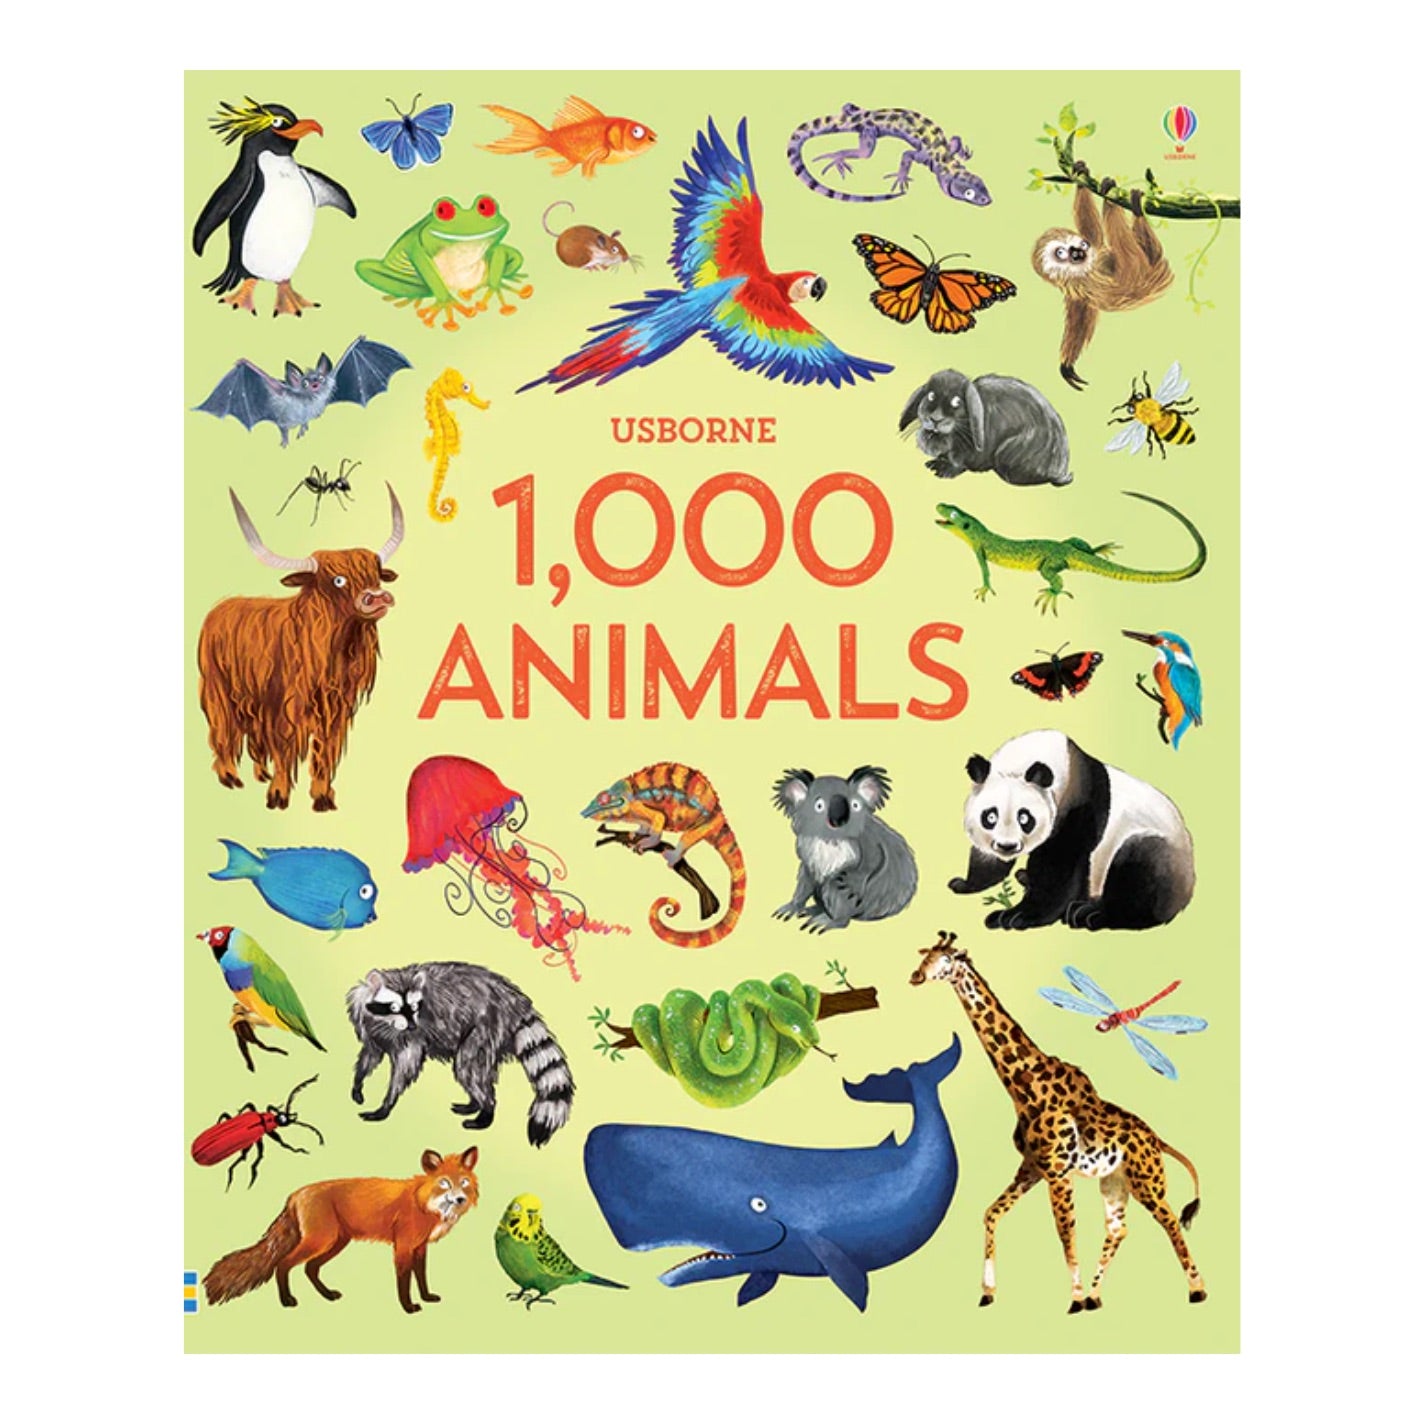 1,000 Animals